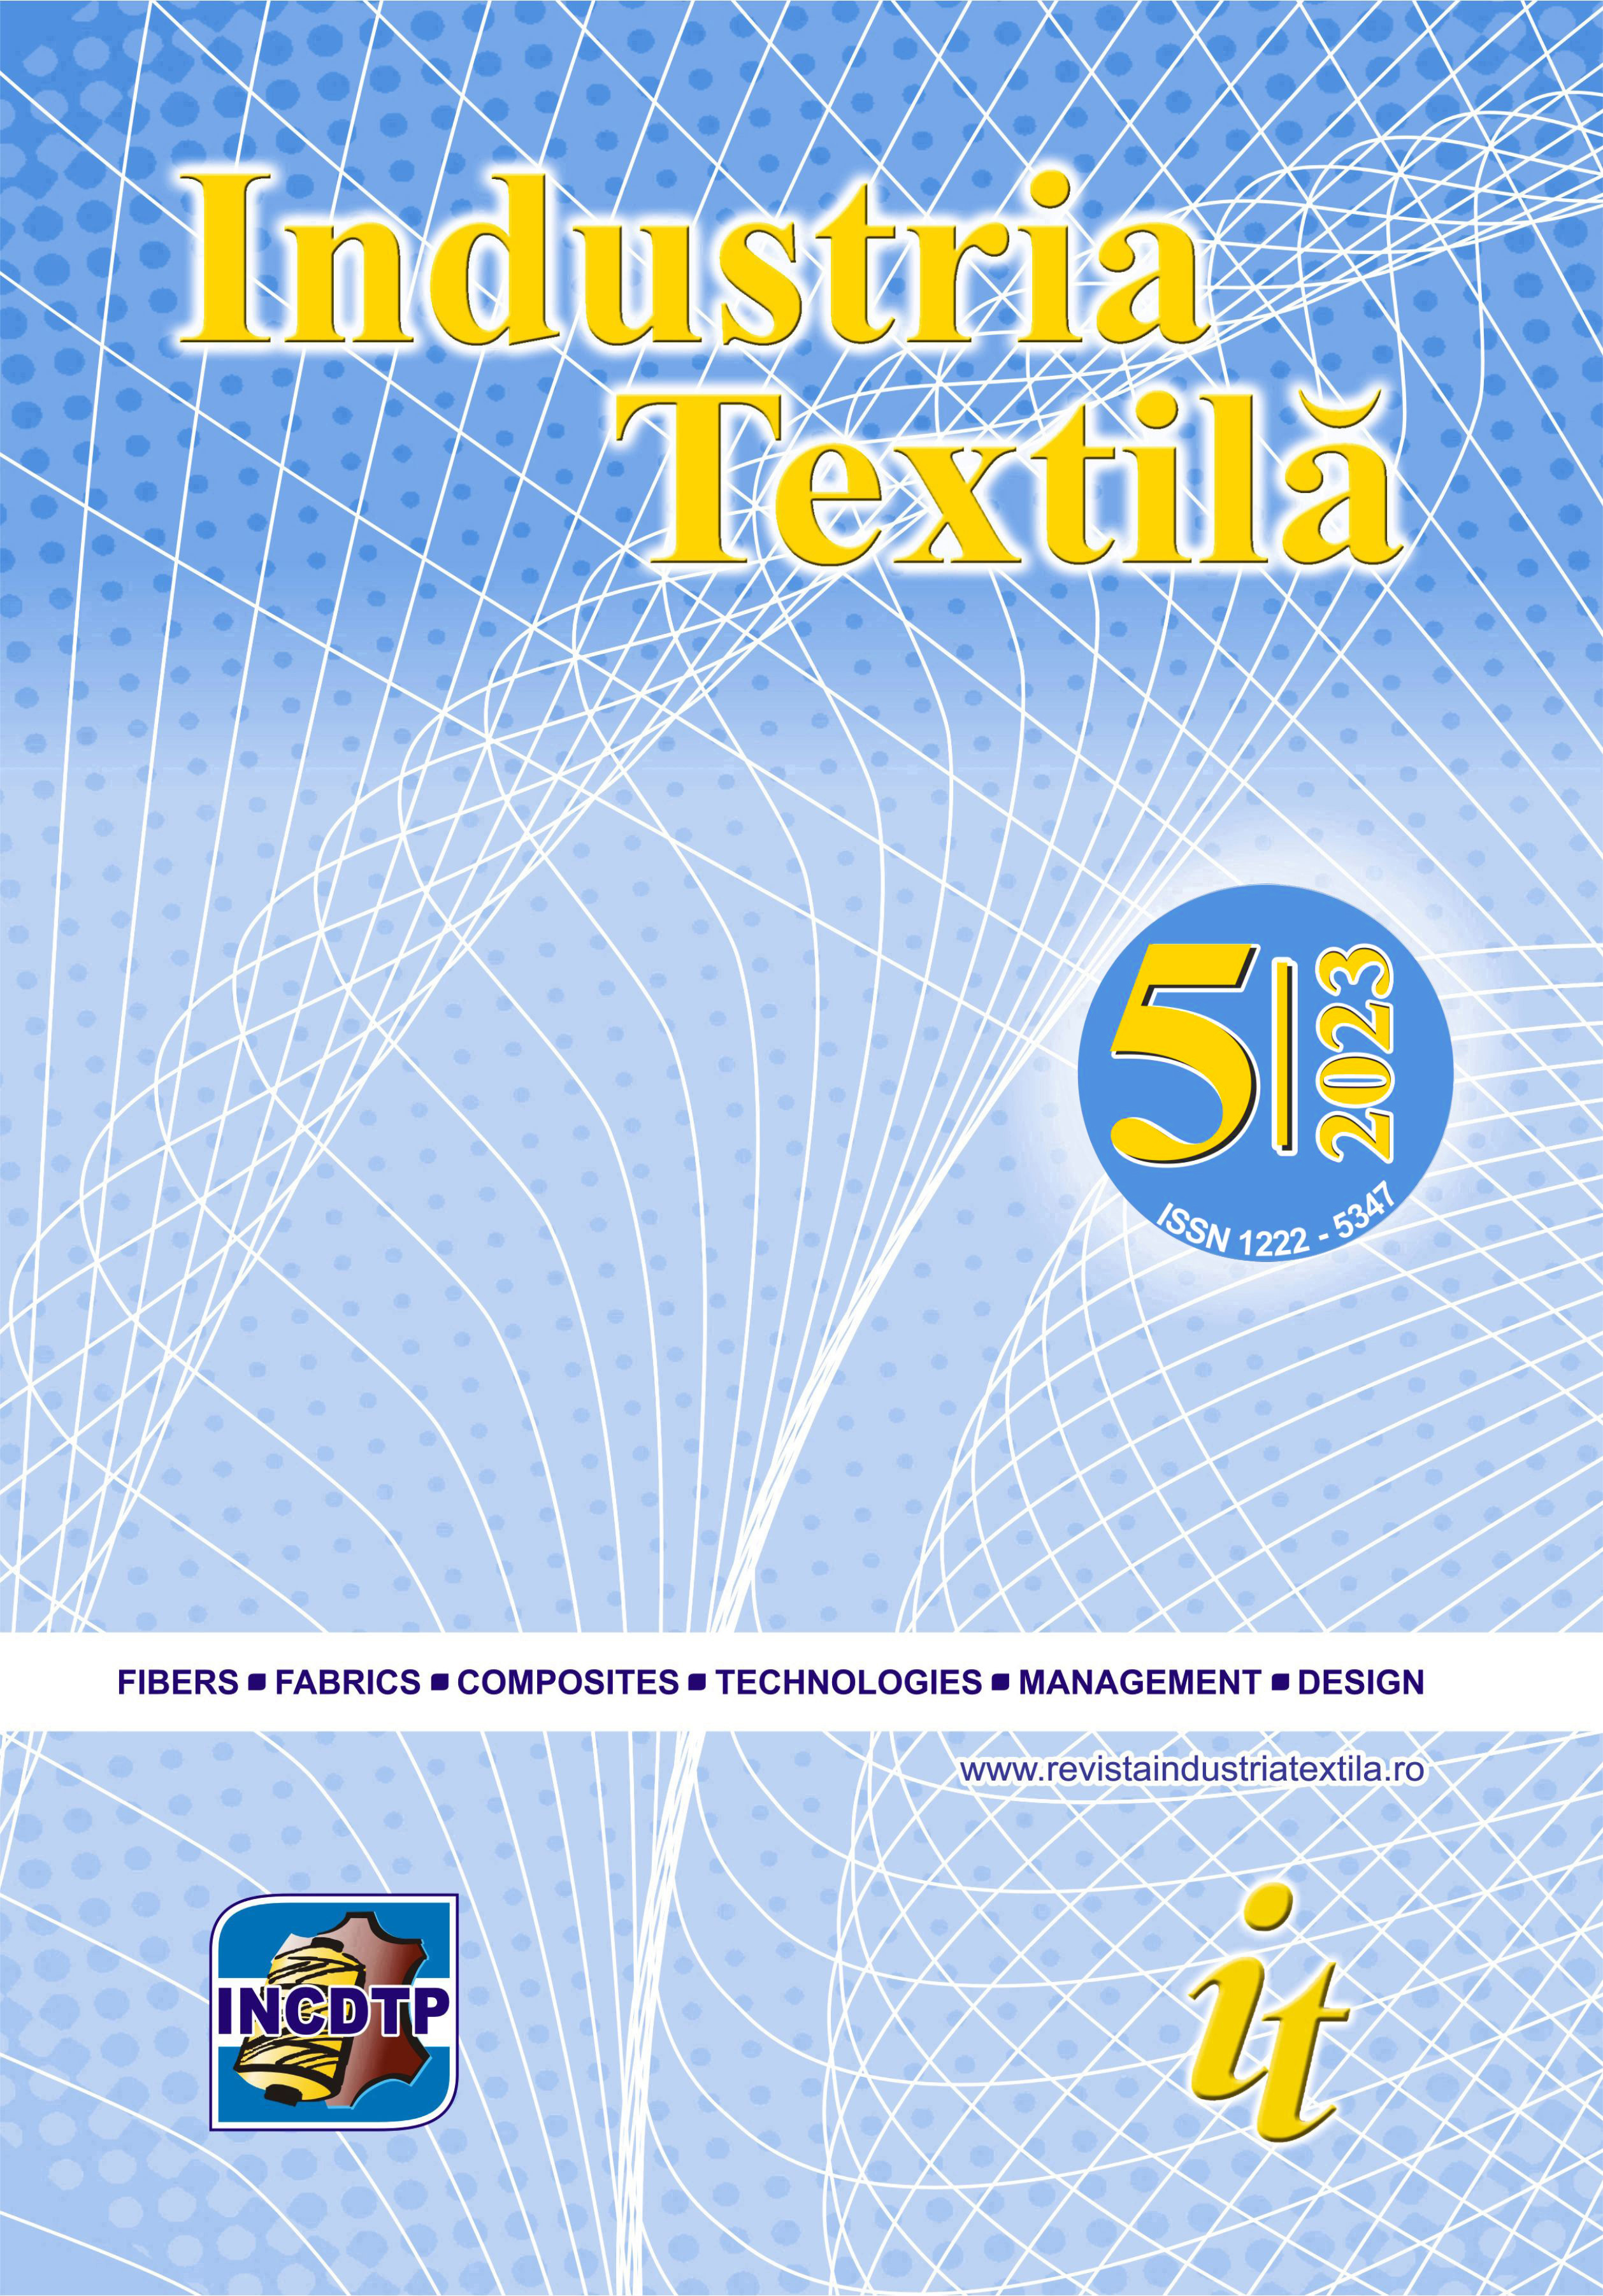 Journal Industria Textila